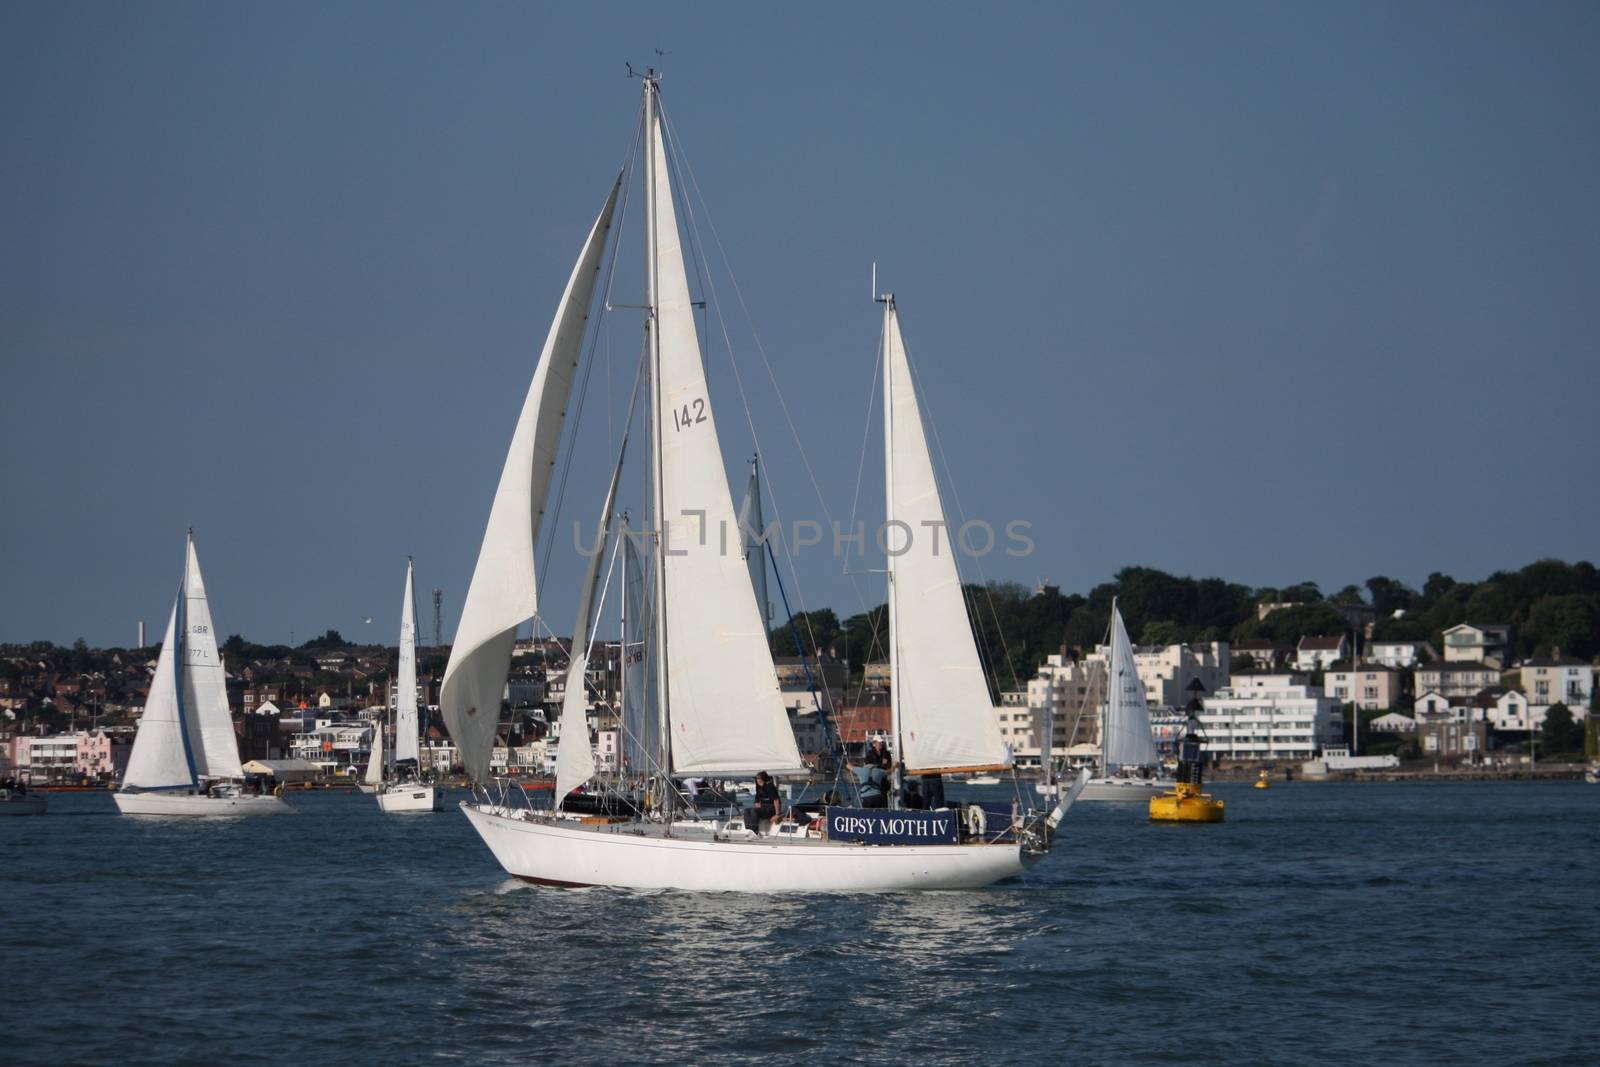 Gipsy Moth IV sailbboat sailing on the solent